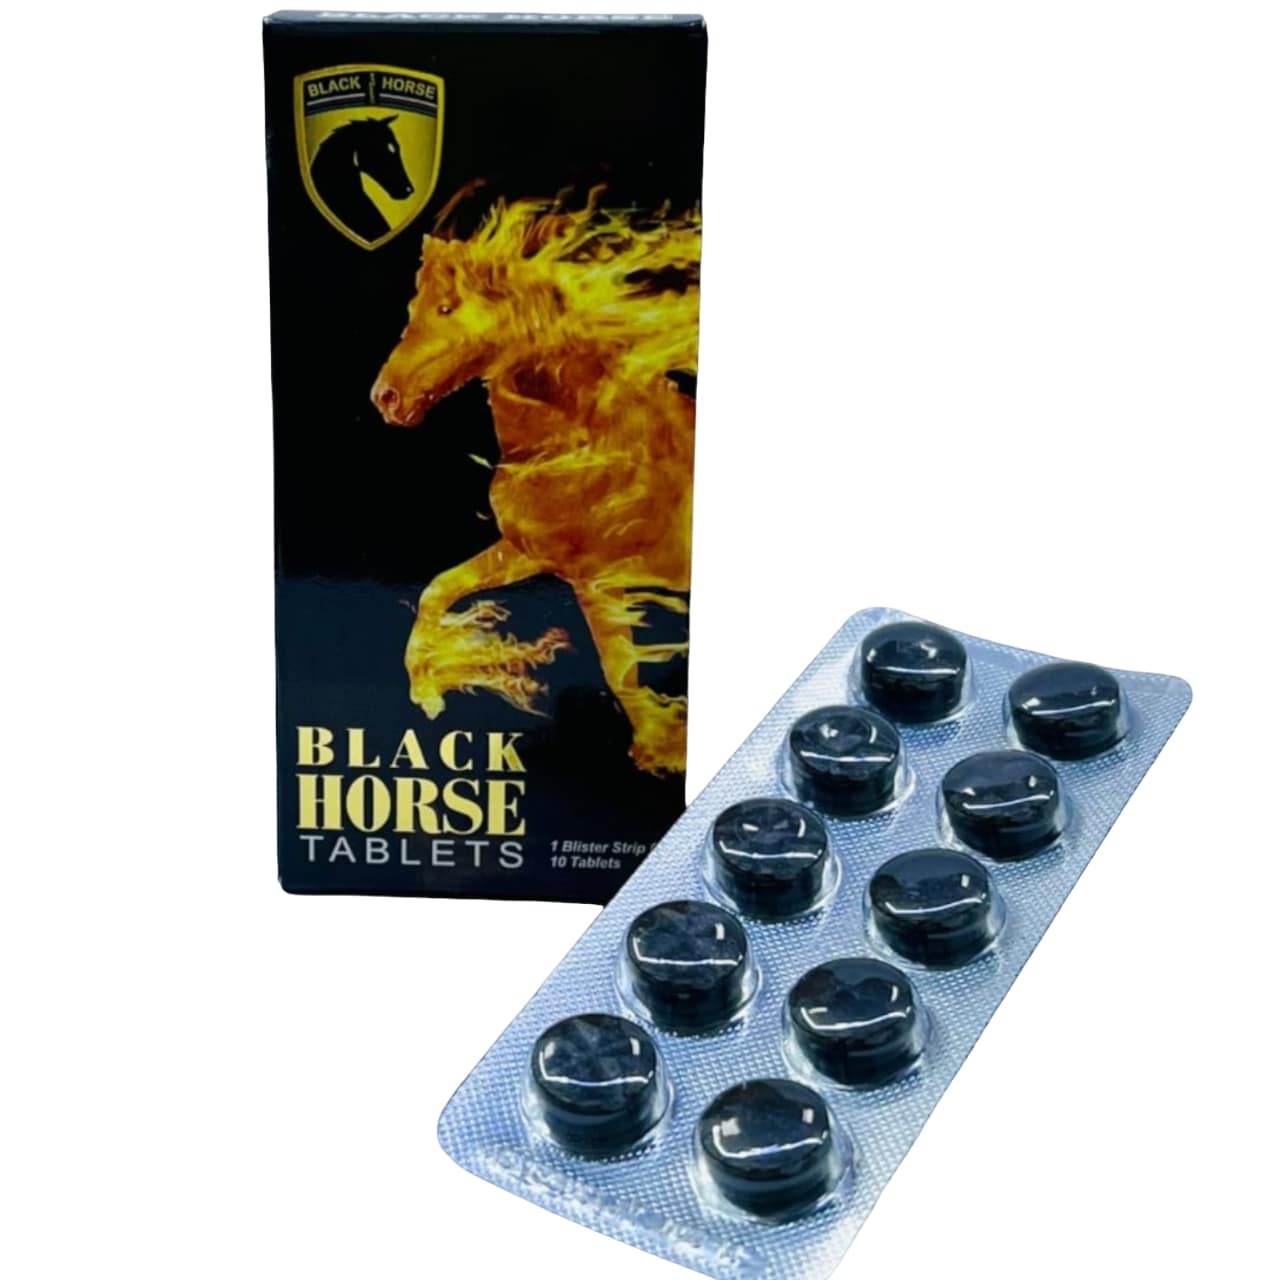 Black Horse Tablets In UAE